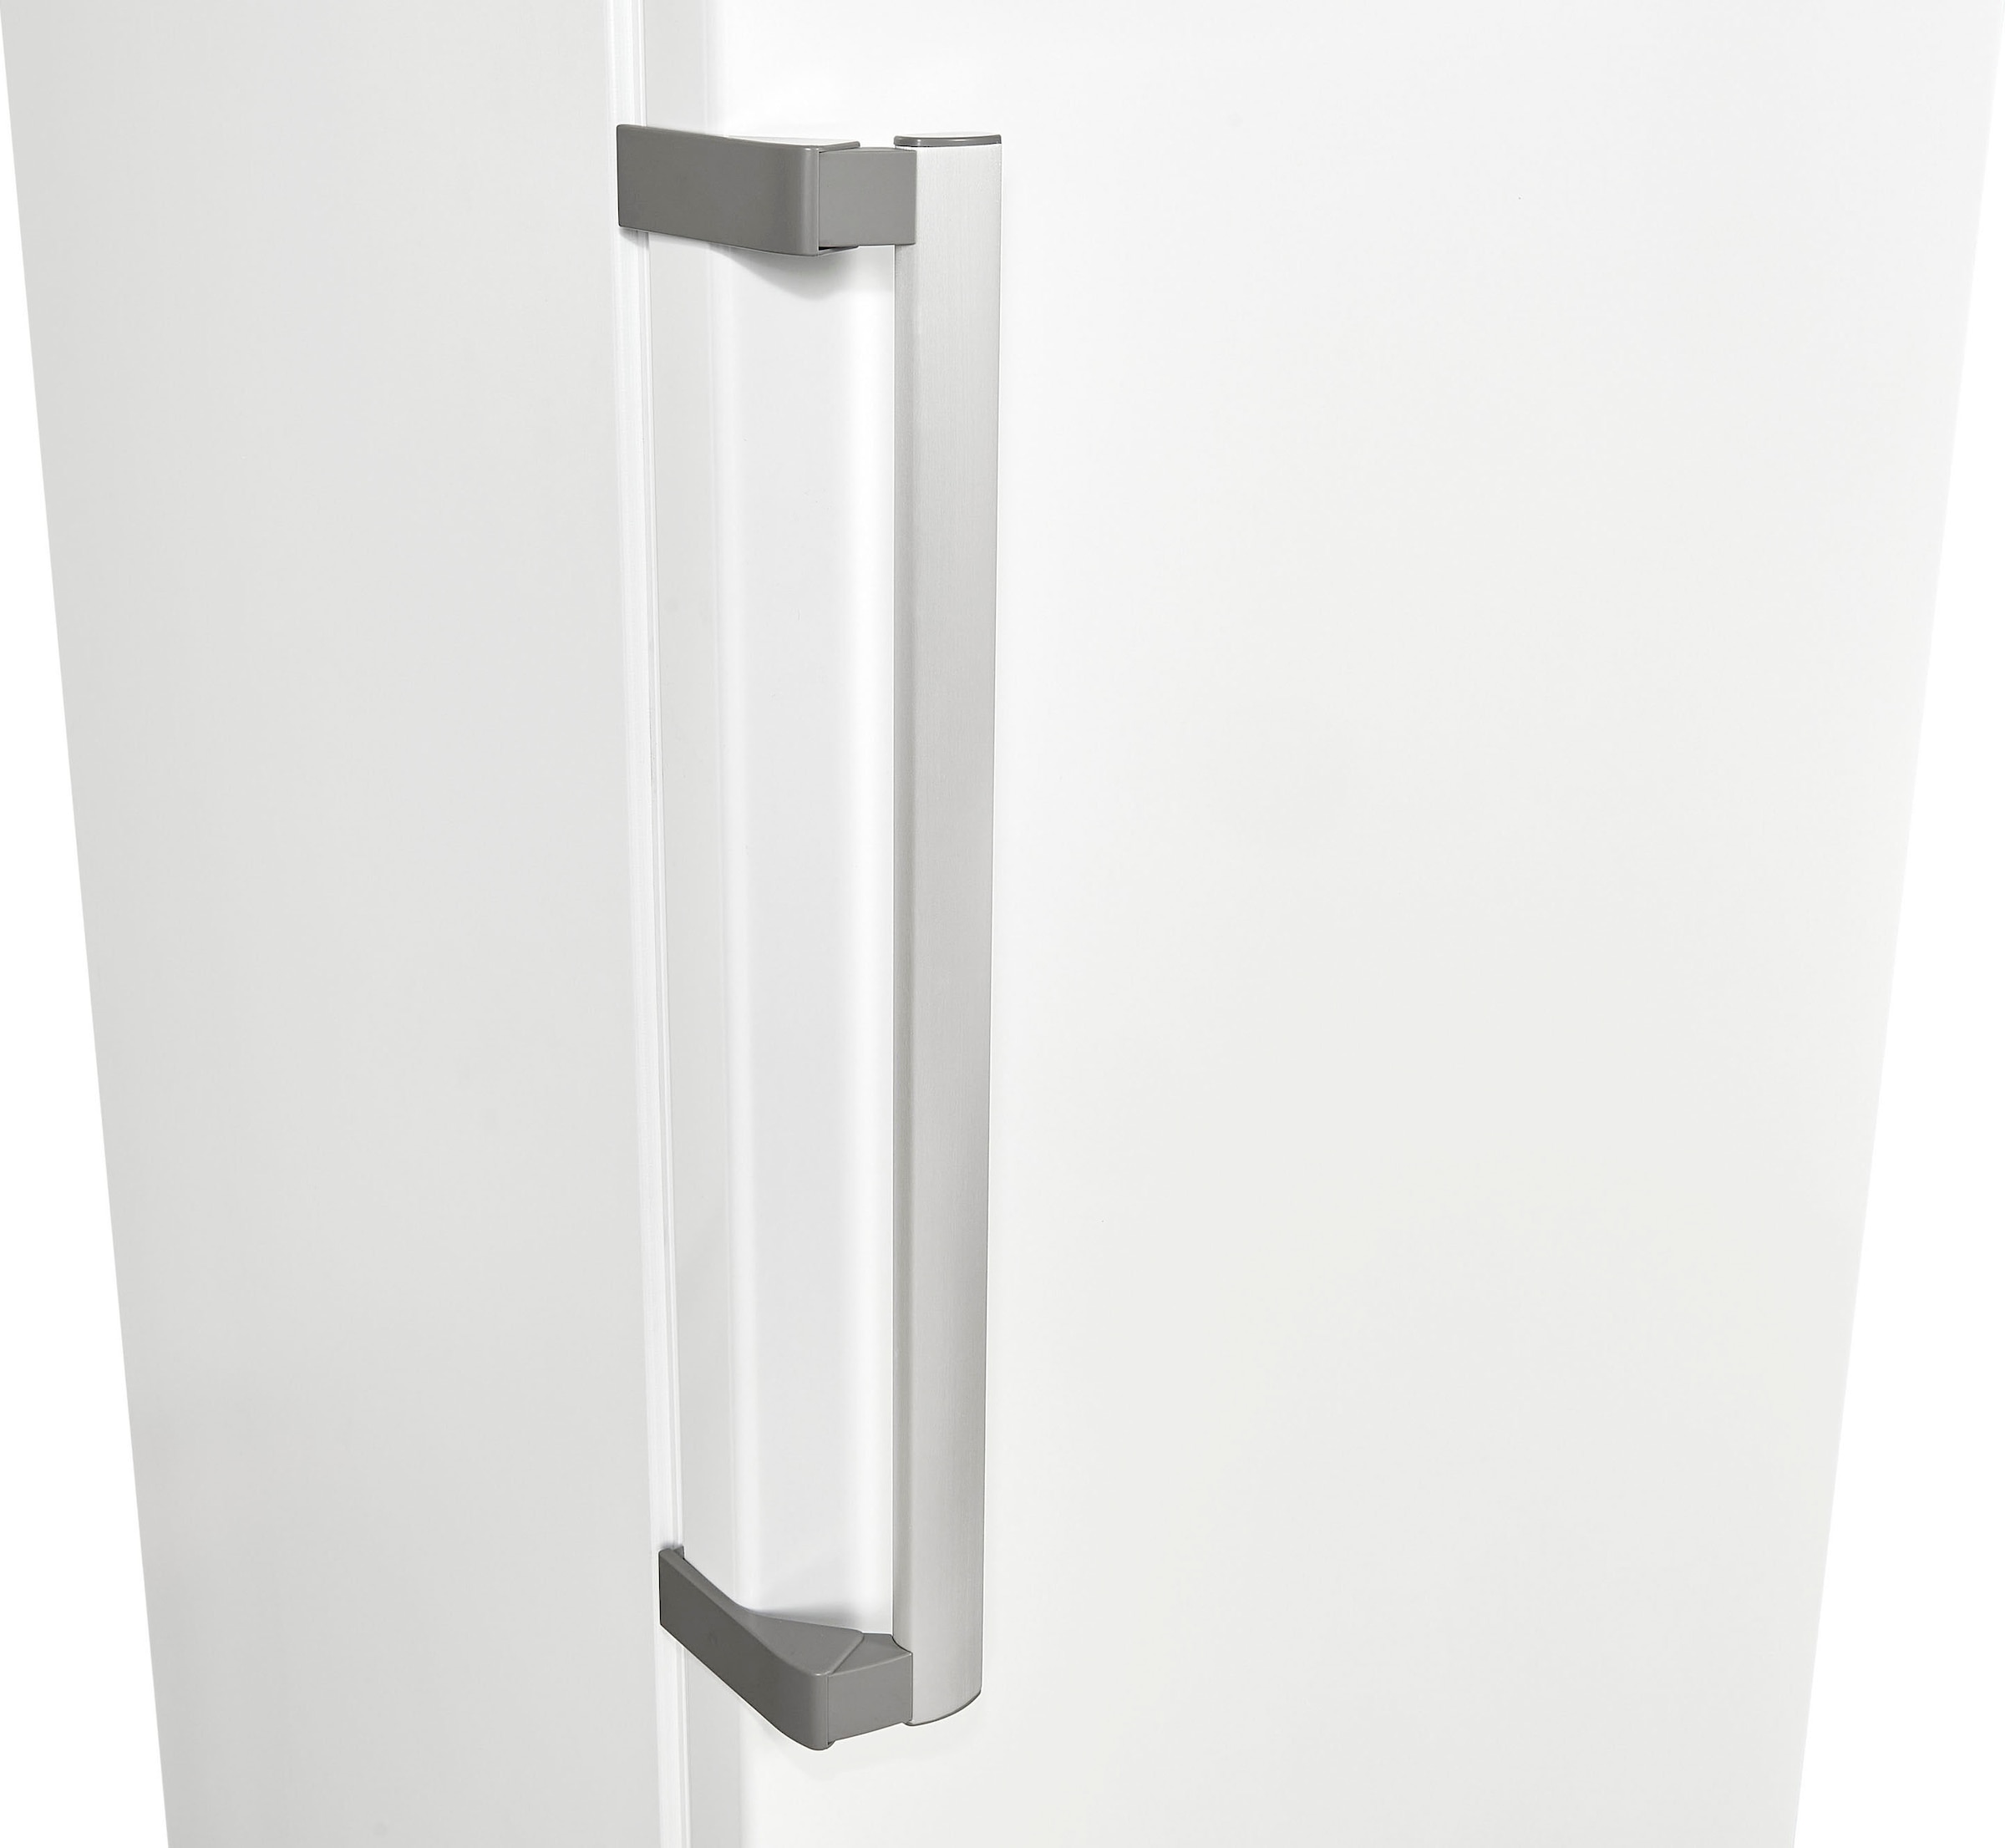 exquisit Vollraumkühlschrank »KS360-V-HE-040D«, KS360-V-HE-040D, 185 cm hoch, 60 cm breit, 359 Liter Nutzinhalt, NoFrost, Display